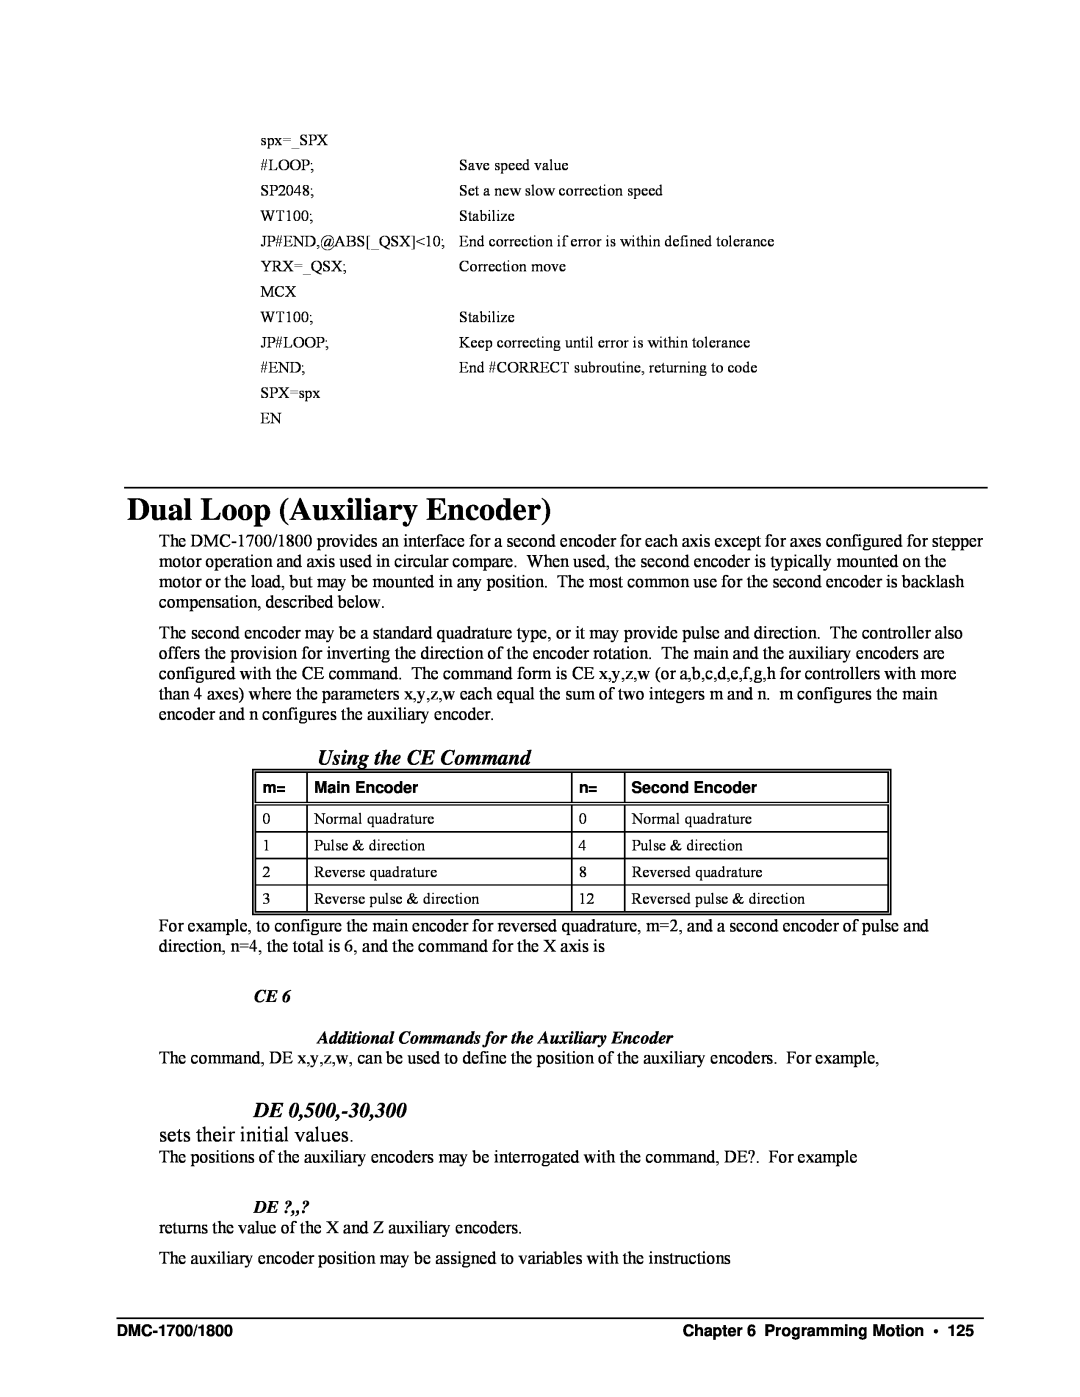 Galil DMC-1700, DMC-1800 user manual Dual Loop Auxiliary Encoder, Using the CE Command, DE 0,500,-30,300, De ?,,? 